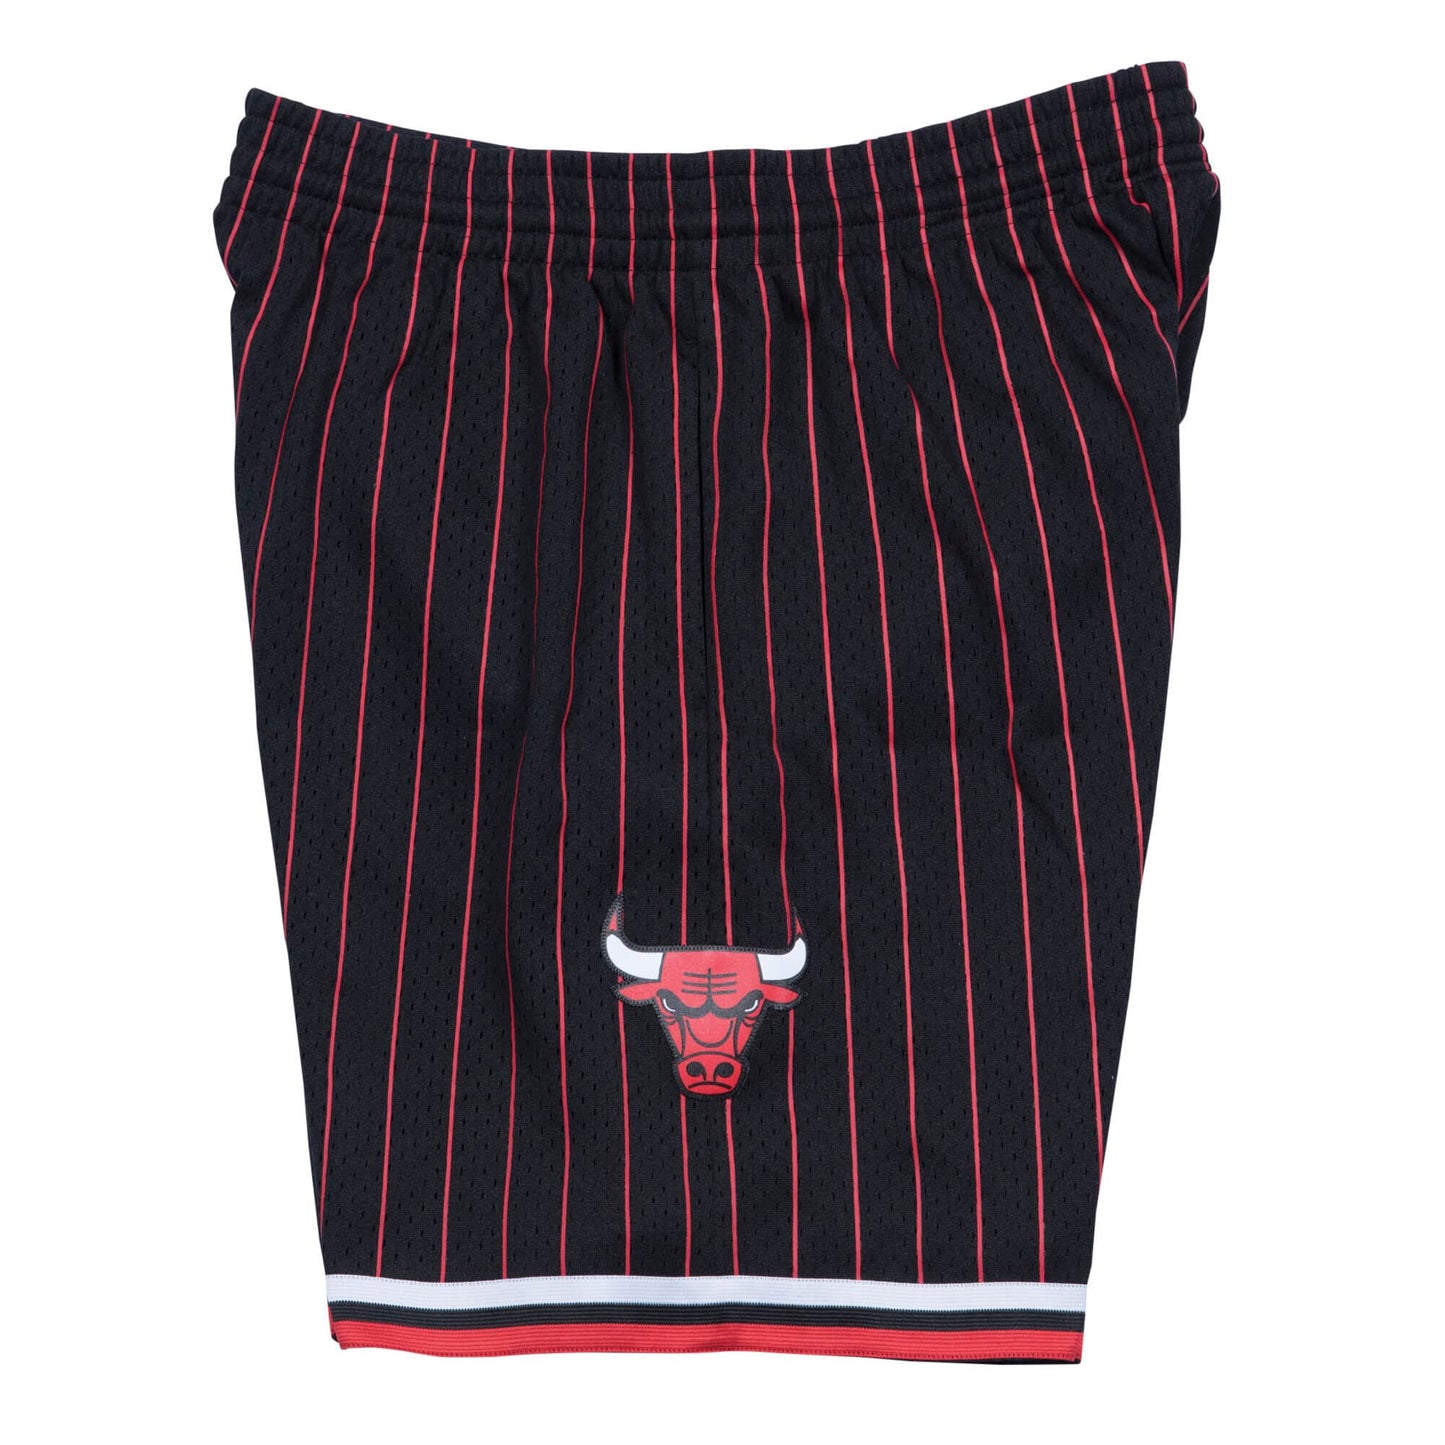 NBA Swingman Shorts Chicago Bulls Alternate 1996-97